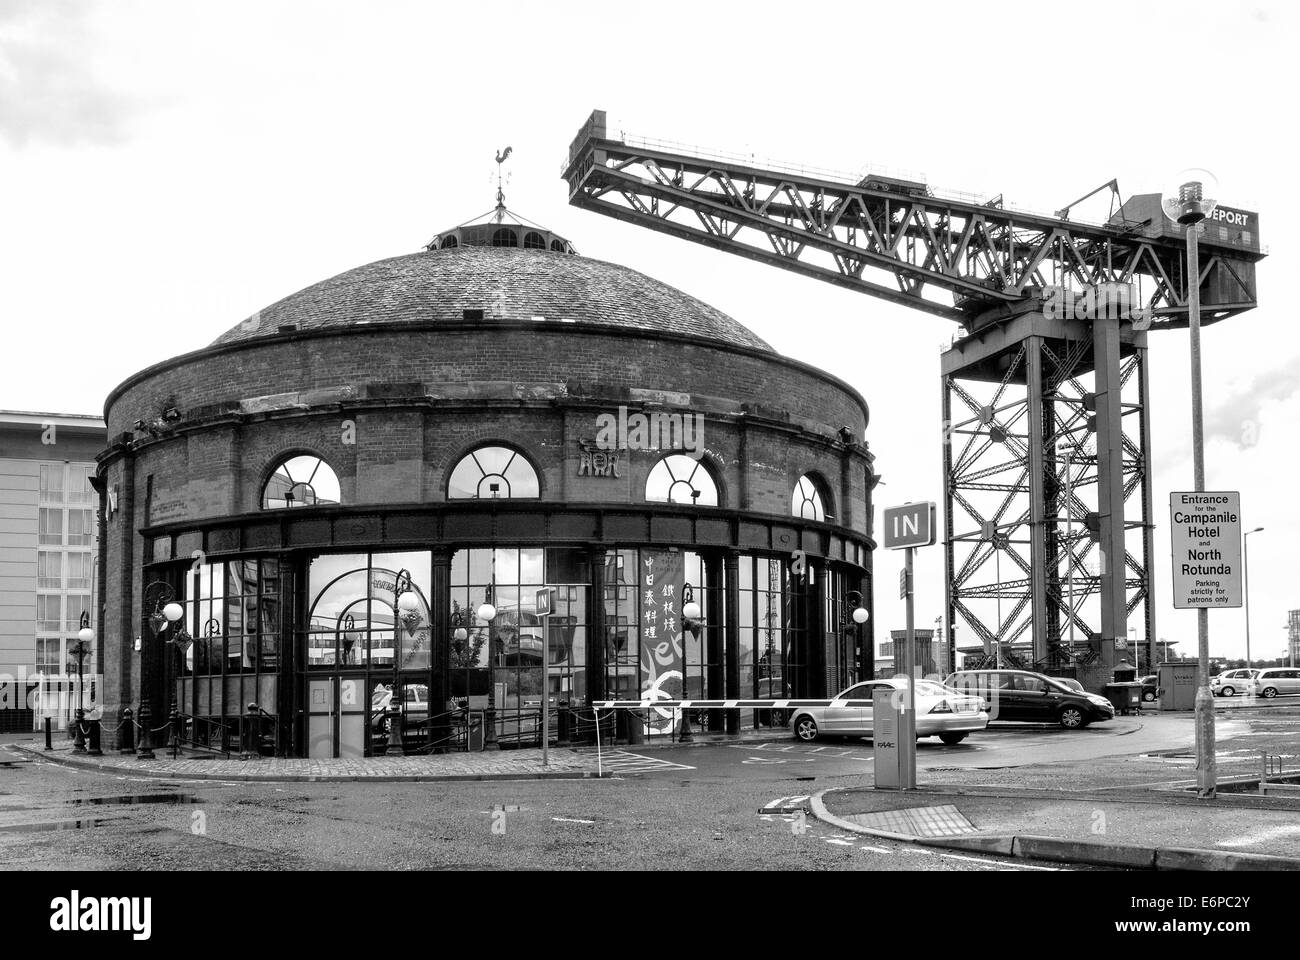 Clydeport Finnieston Crane and north rotunda pacific quay Glasgow Stock Photo